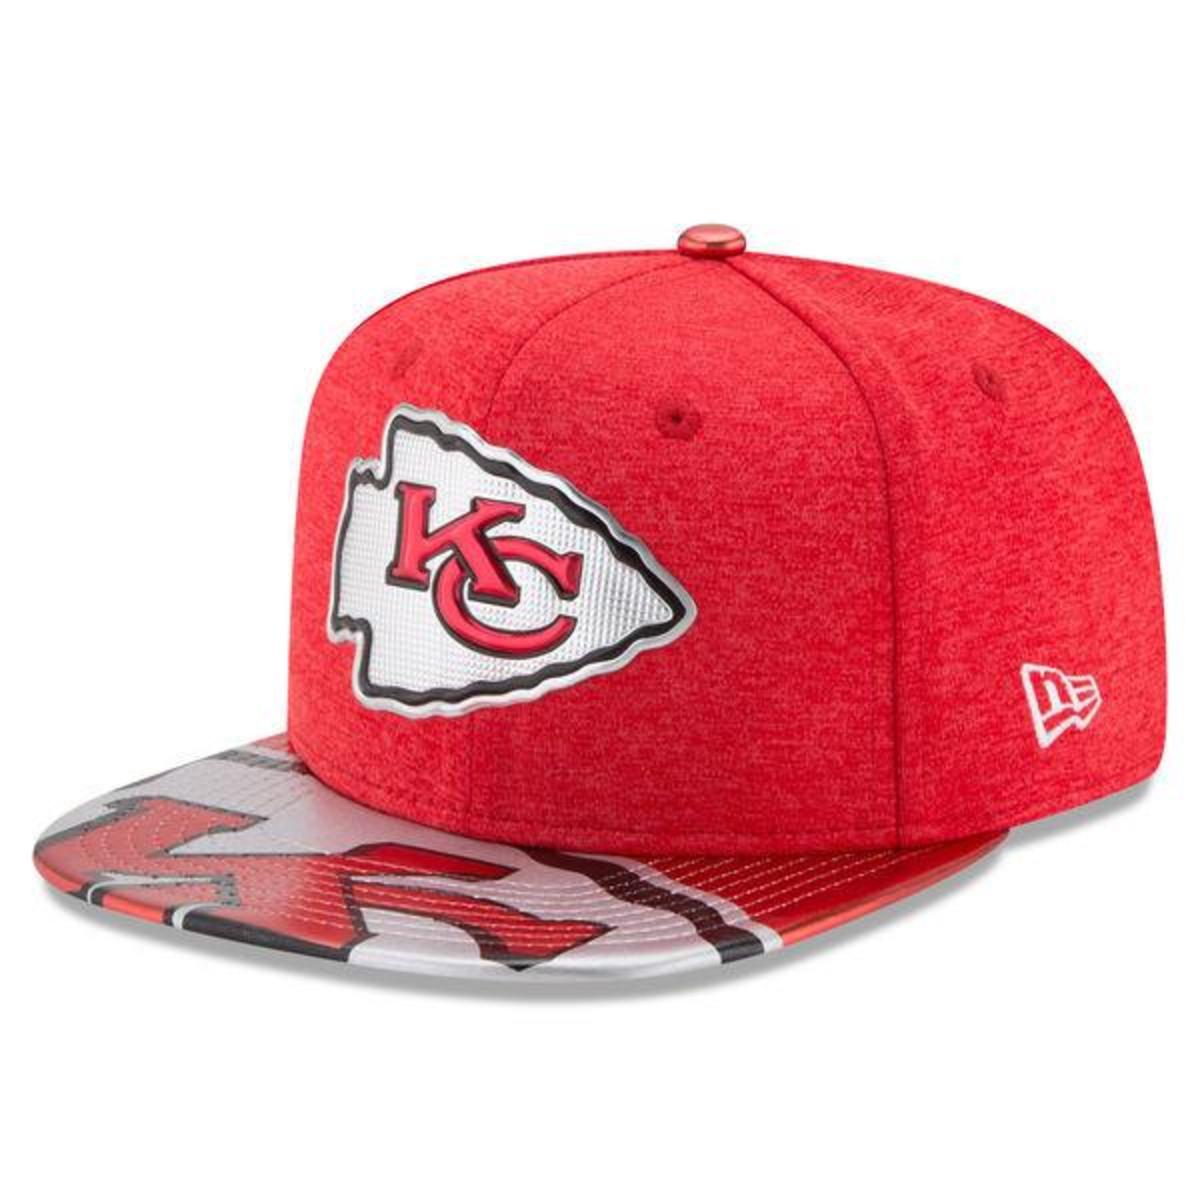 chiefs 2017 draft hat